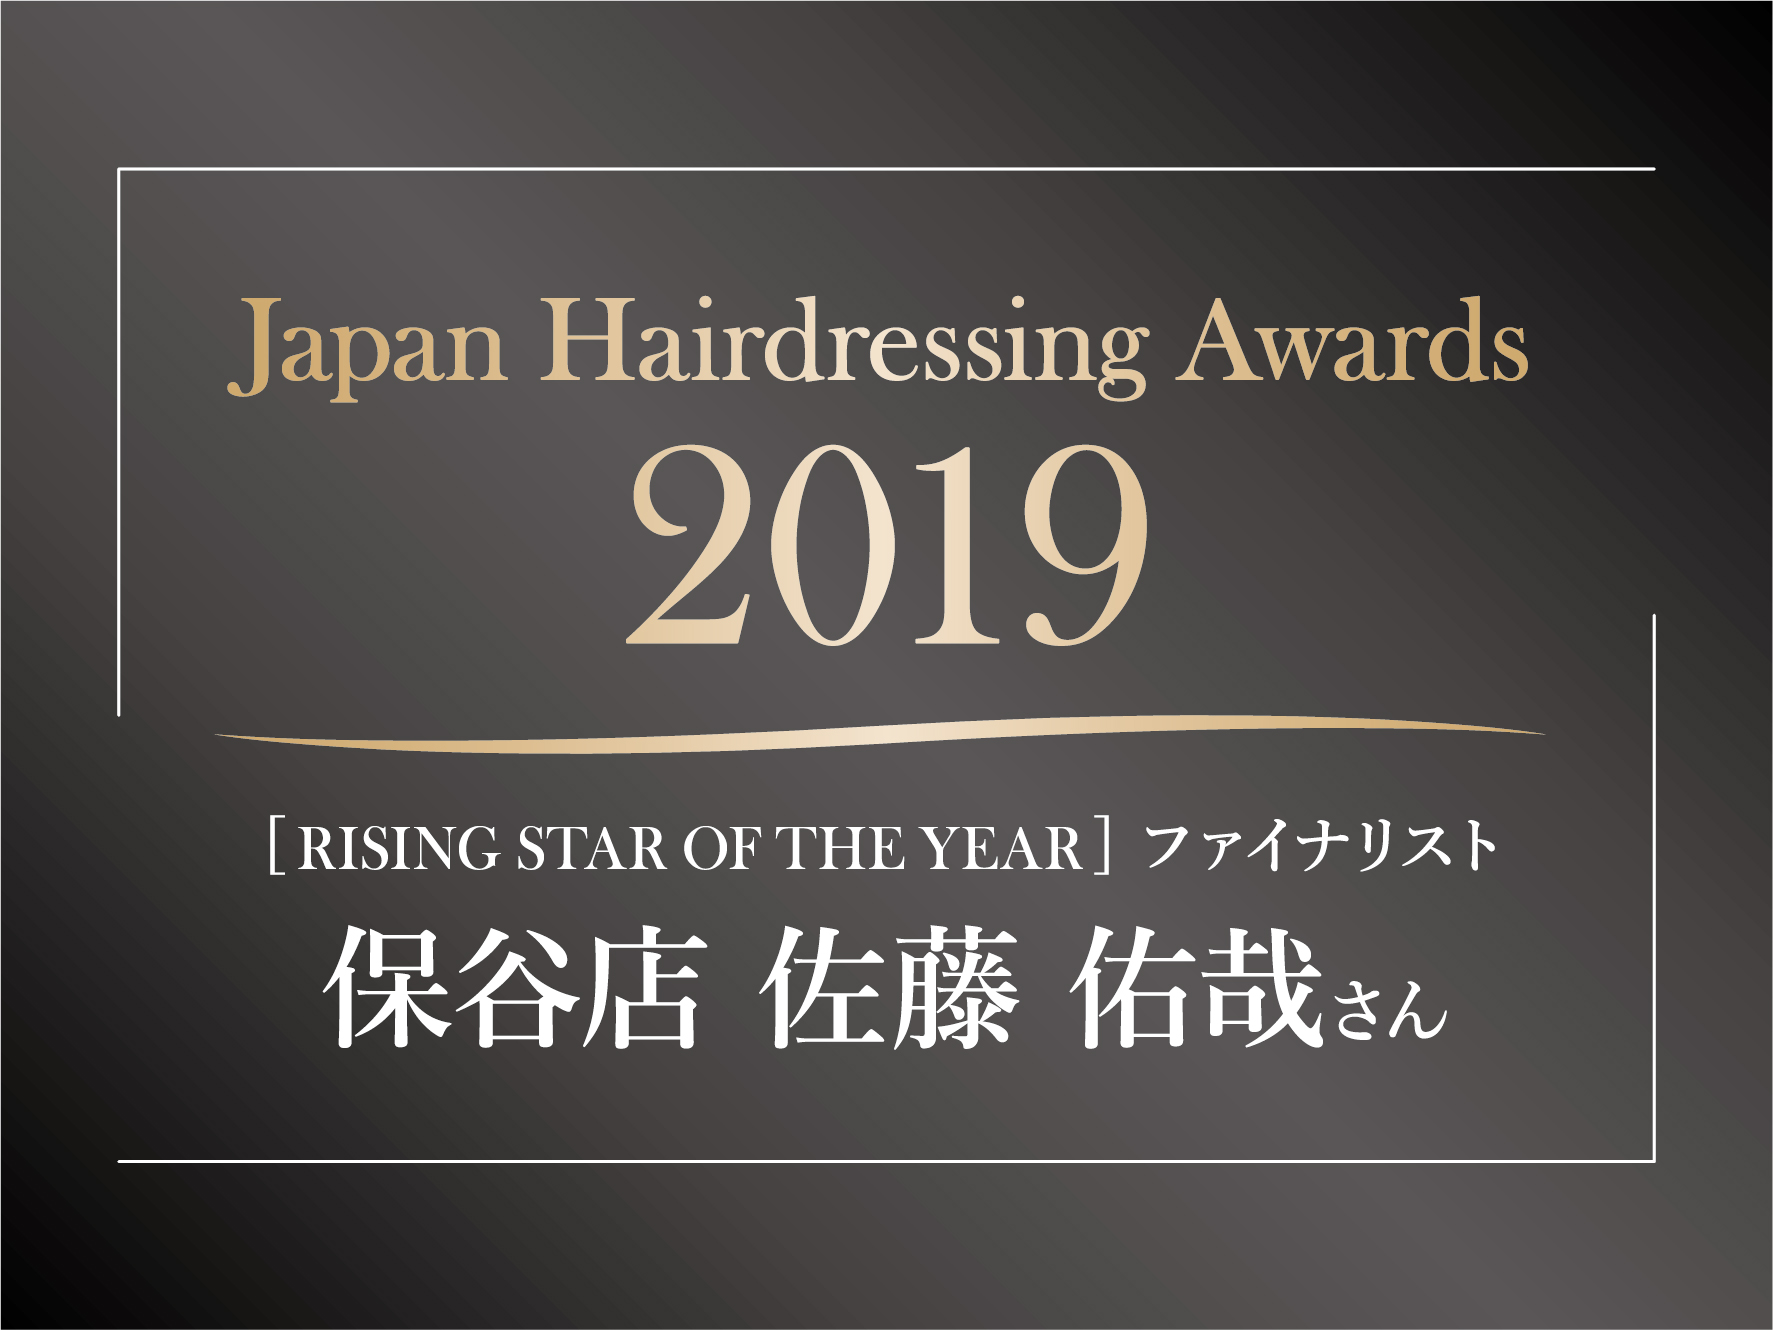 Japan Hairdressing Award 2019 ファイナリストに佐藤 佑哉さんがノミネートされました！